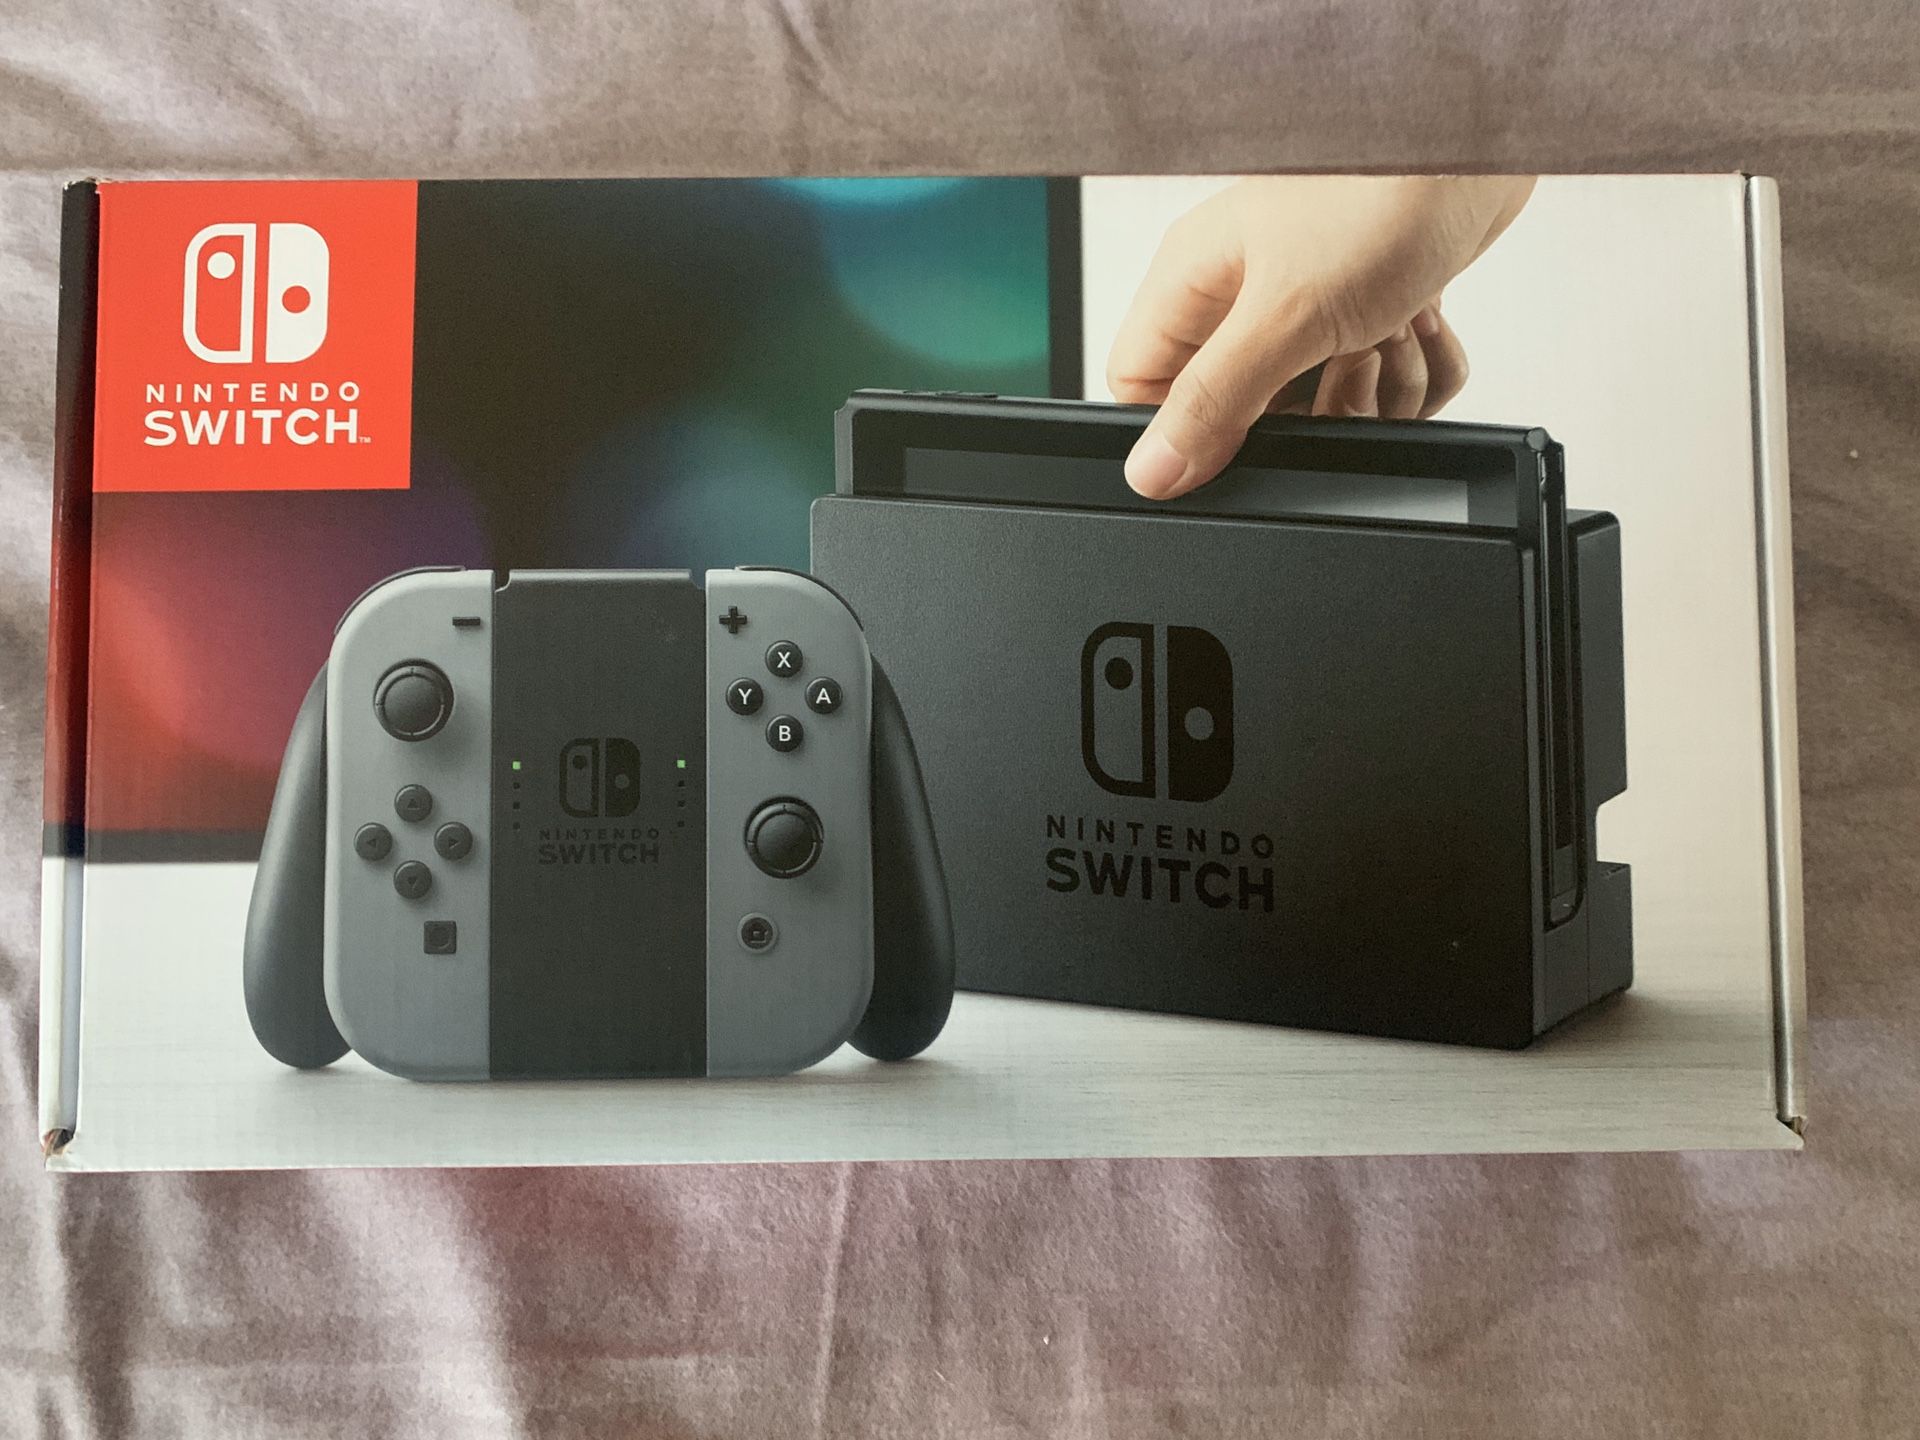 Nintendo Switch w/ Gray Joy-Cons (complete)